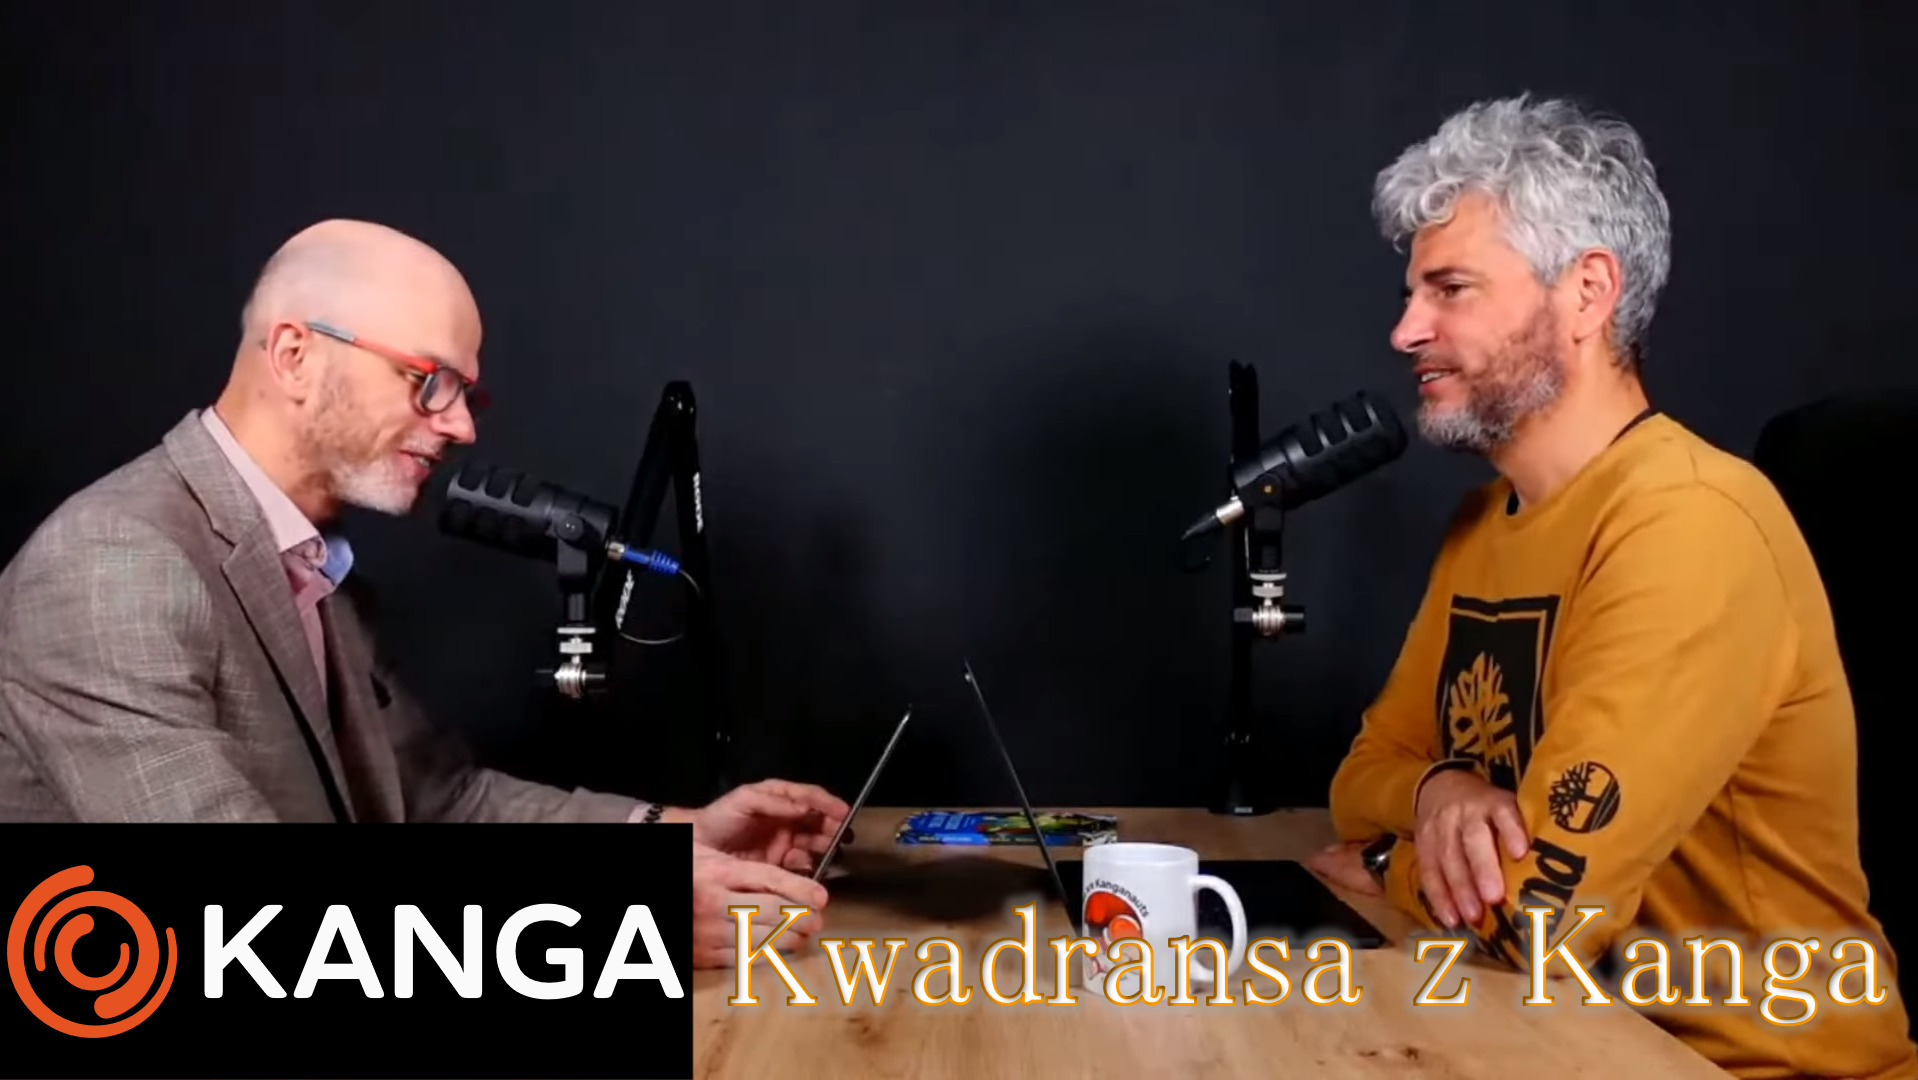 Kwadrans z Kanga 177話「300万ドルの送金」